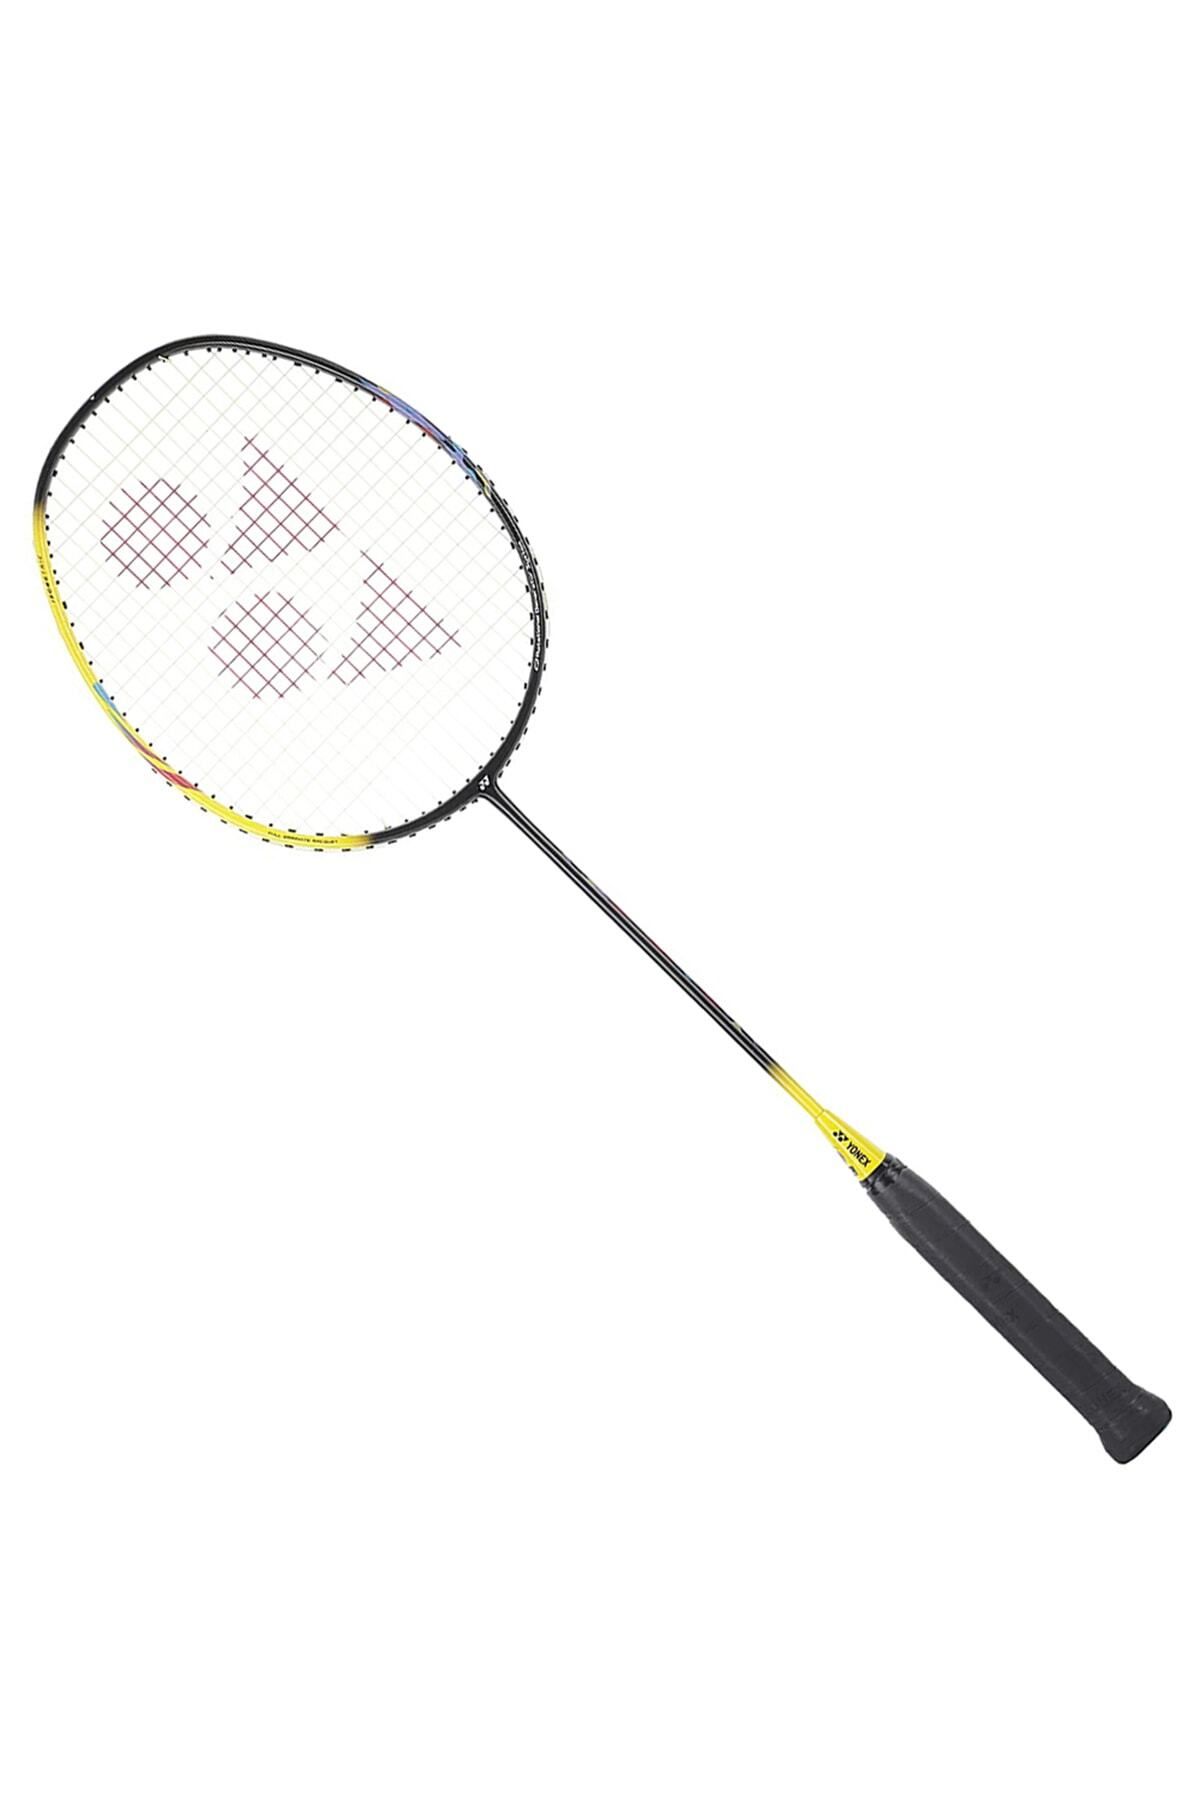 Yonex Astrox 01 Feel Badminton Raketi